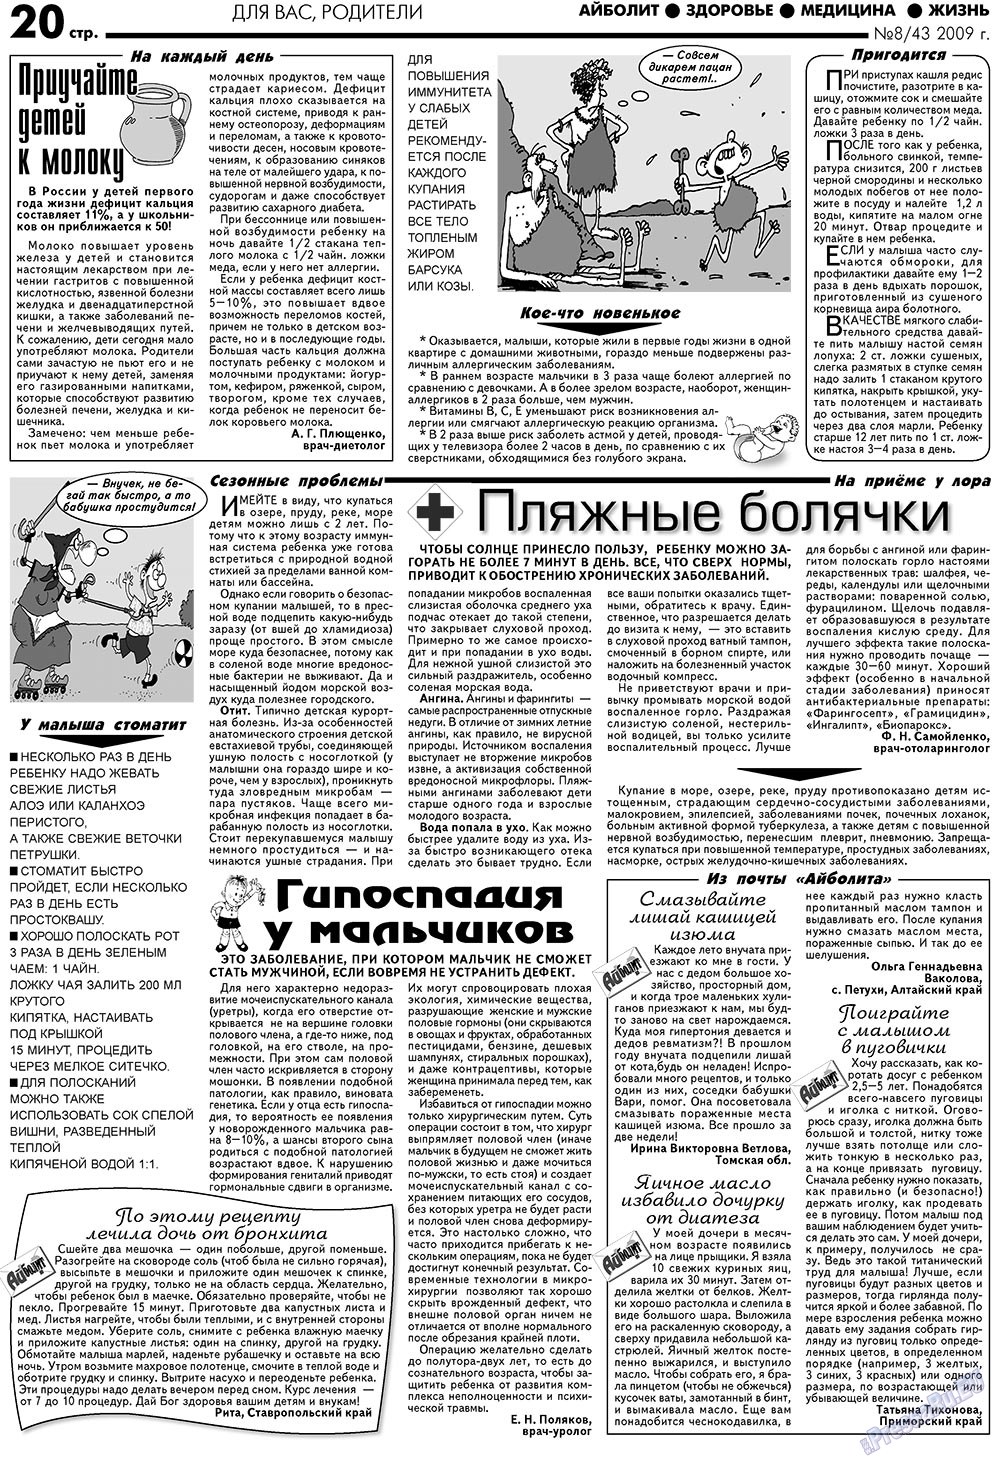 АйБолит (газета). 2009 год, номер 8, стр. 20